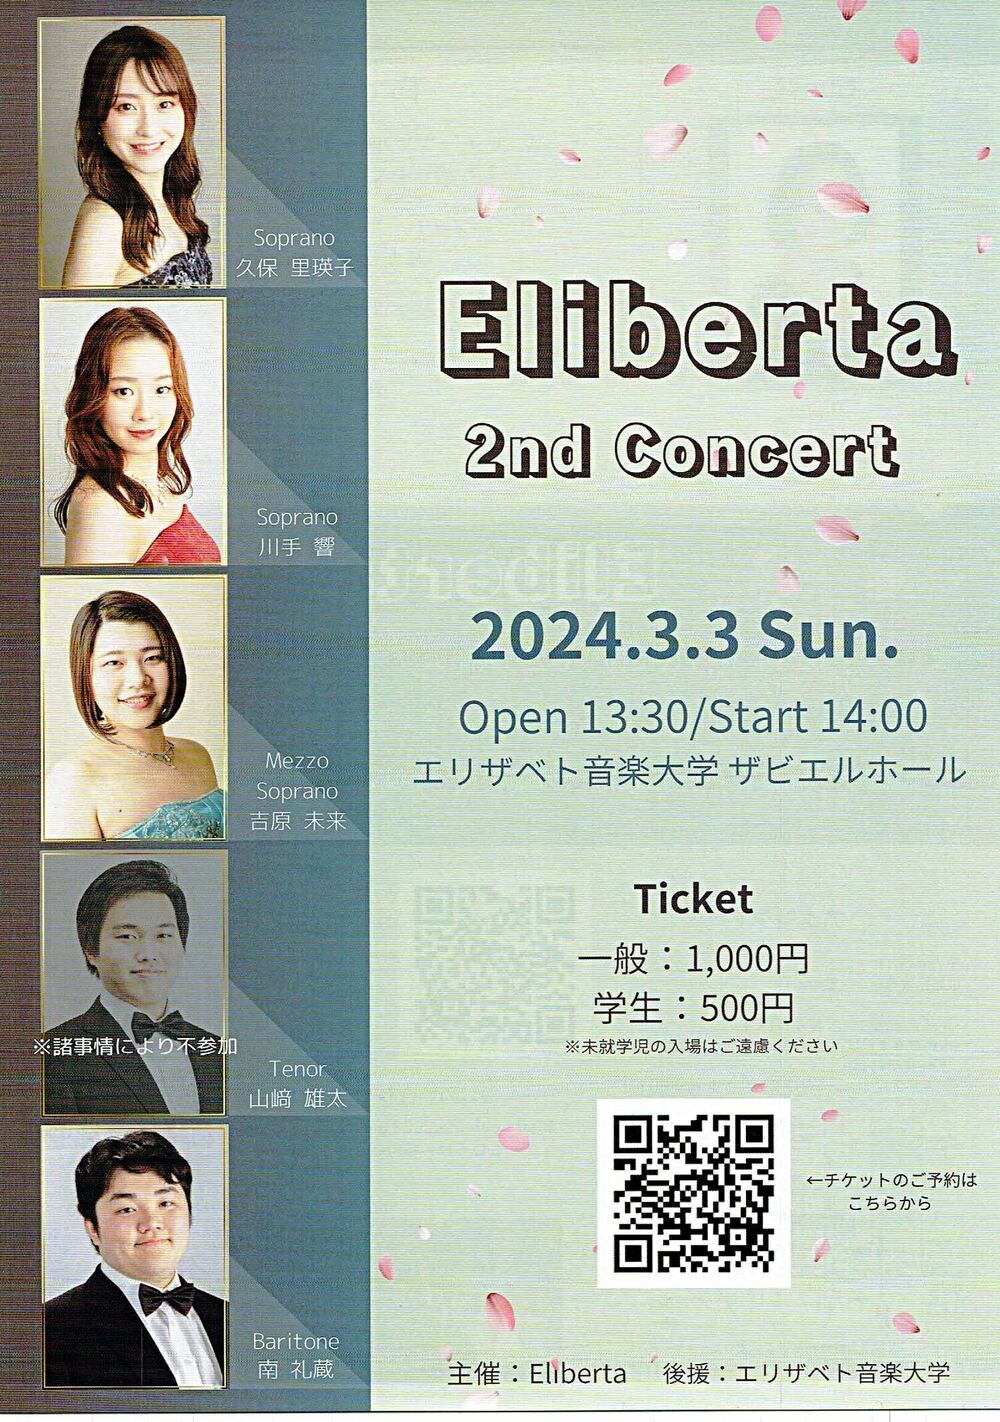 Eliberta 2nd Concert